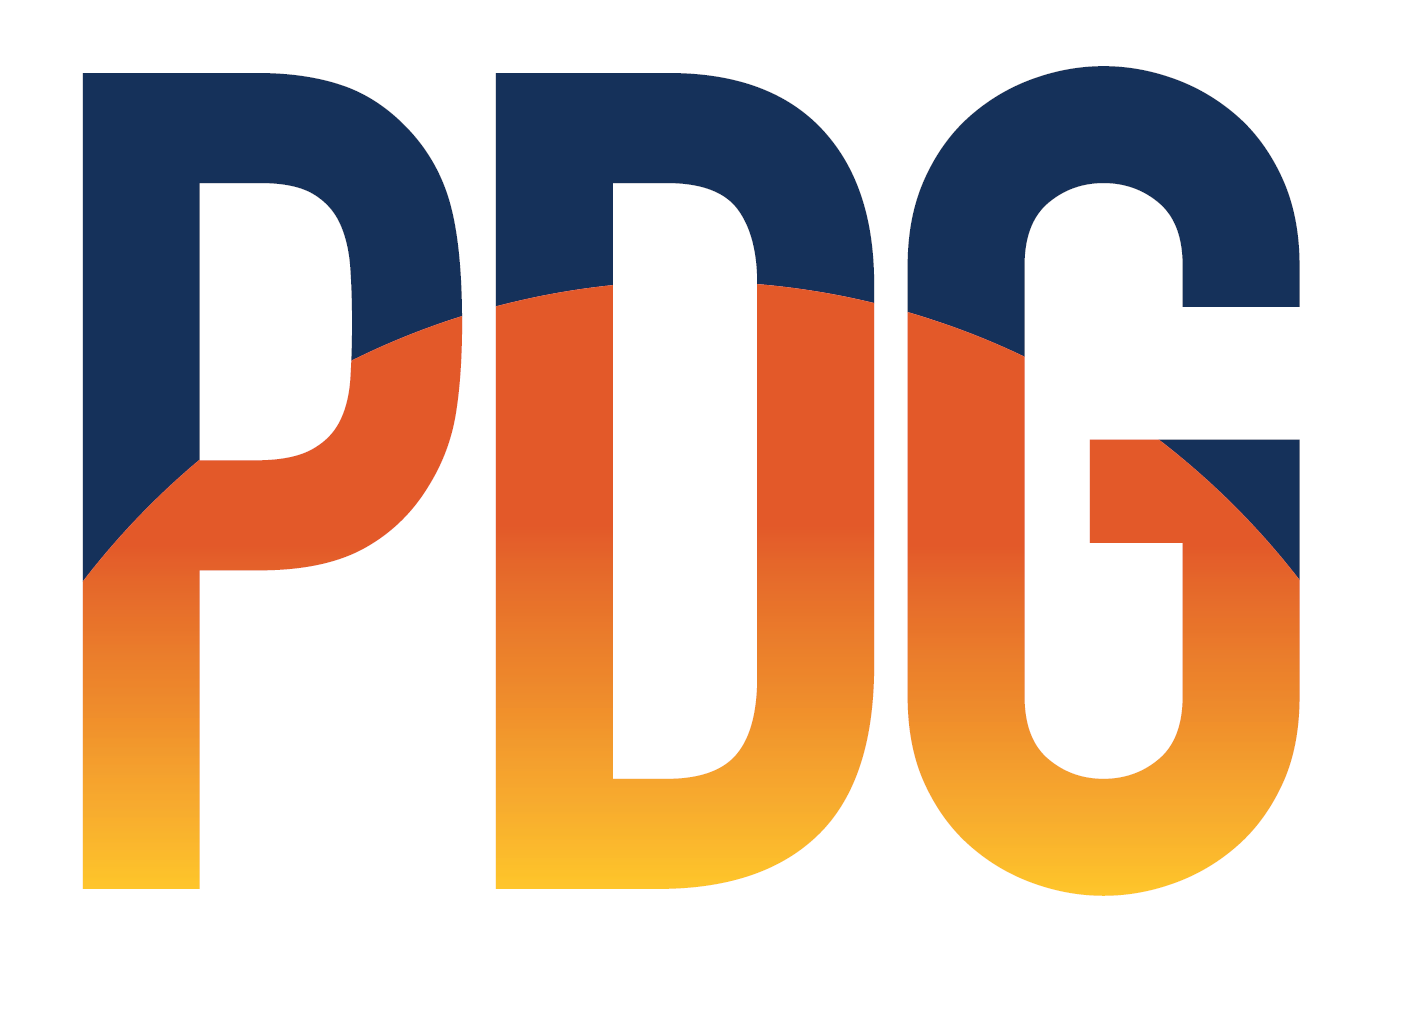 Partnership Development Group logo